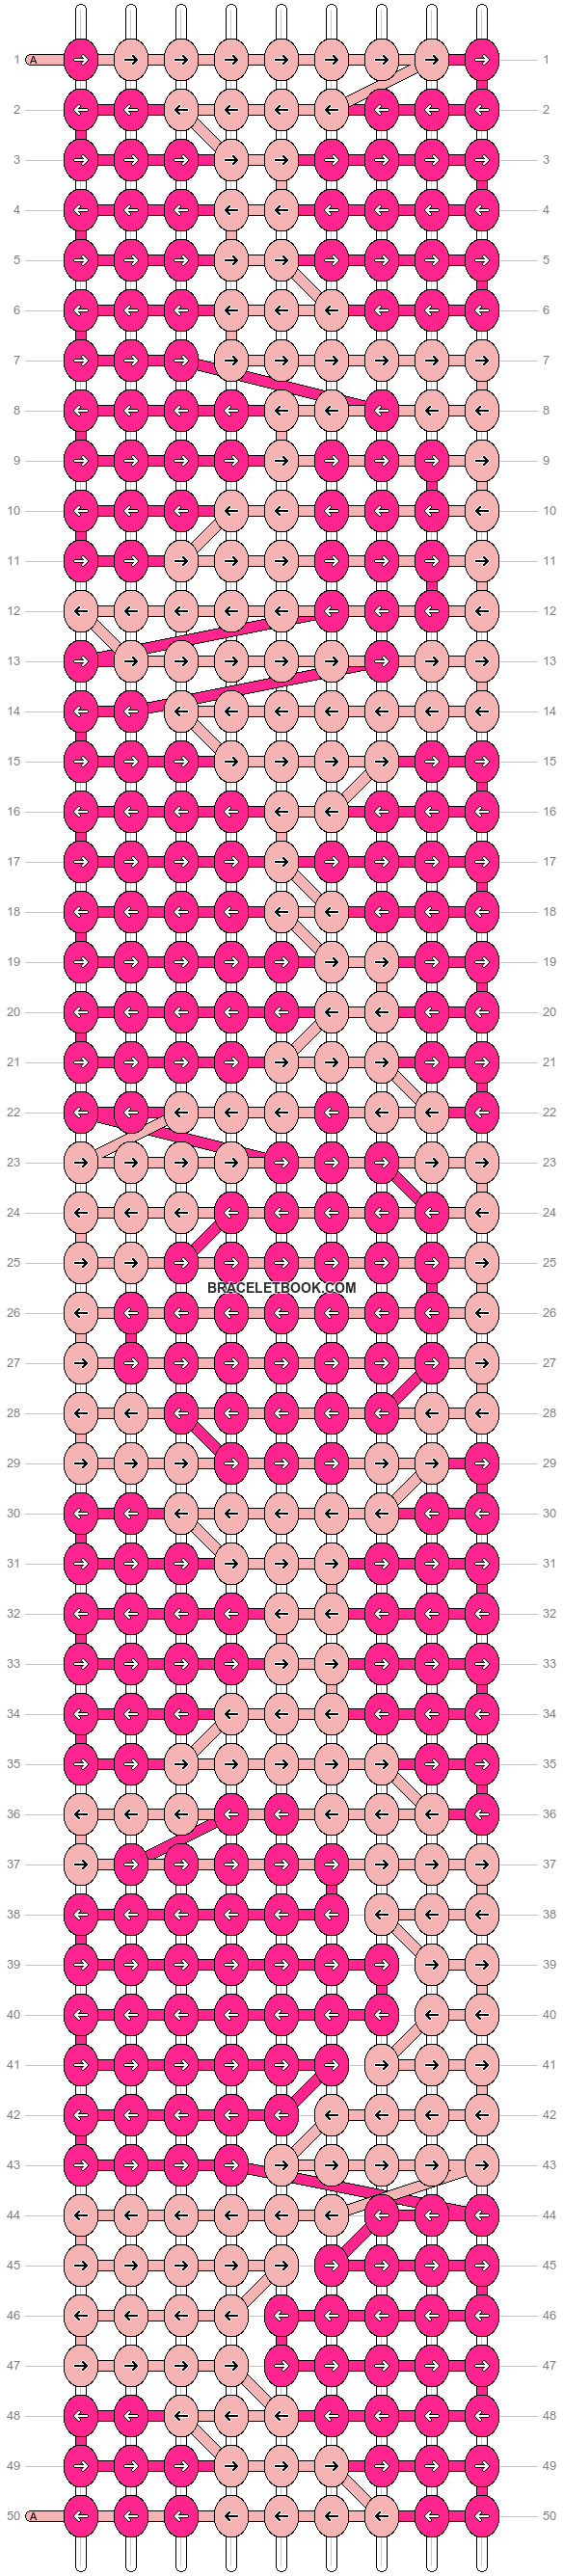 Alpha pattern #51266 variation #108592 pattern